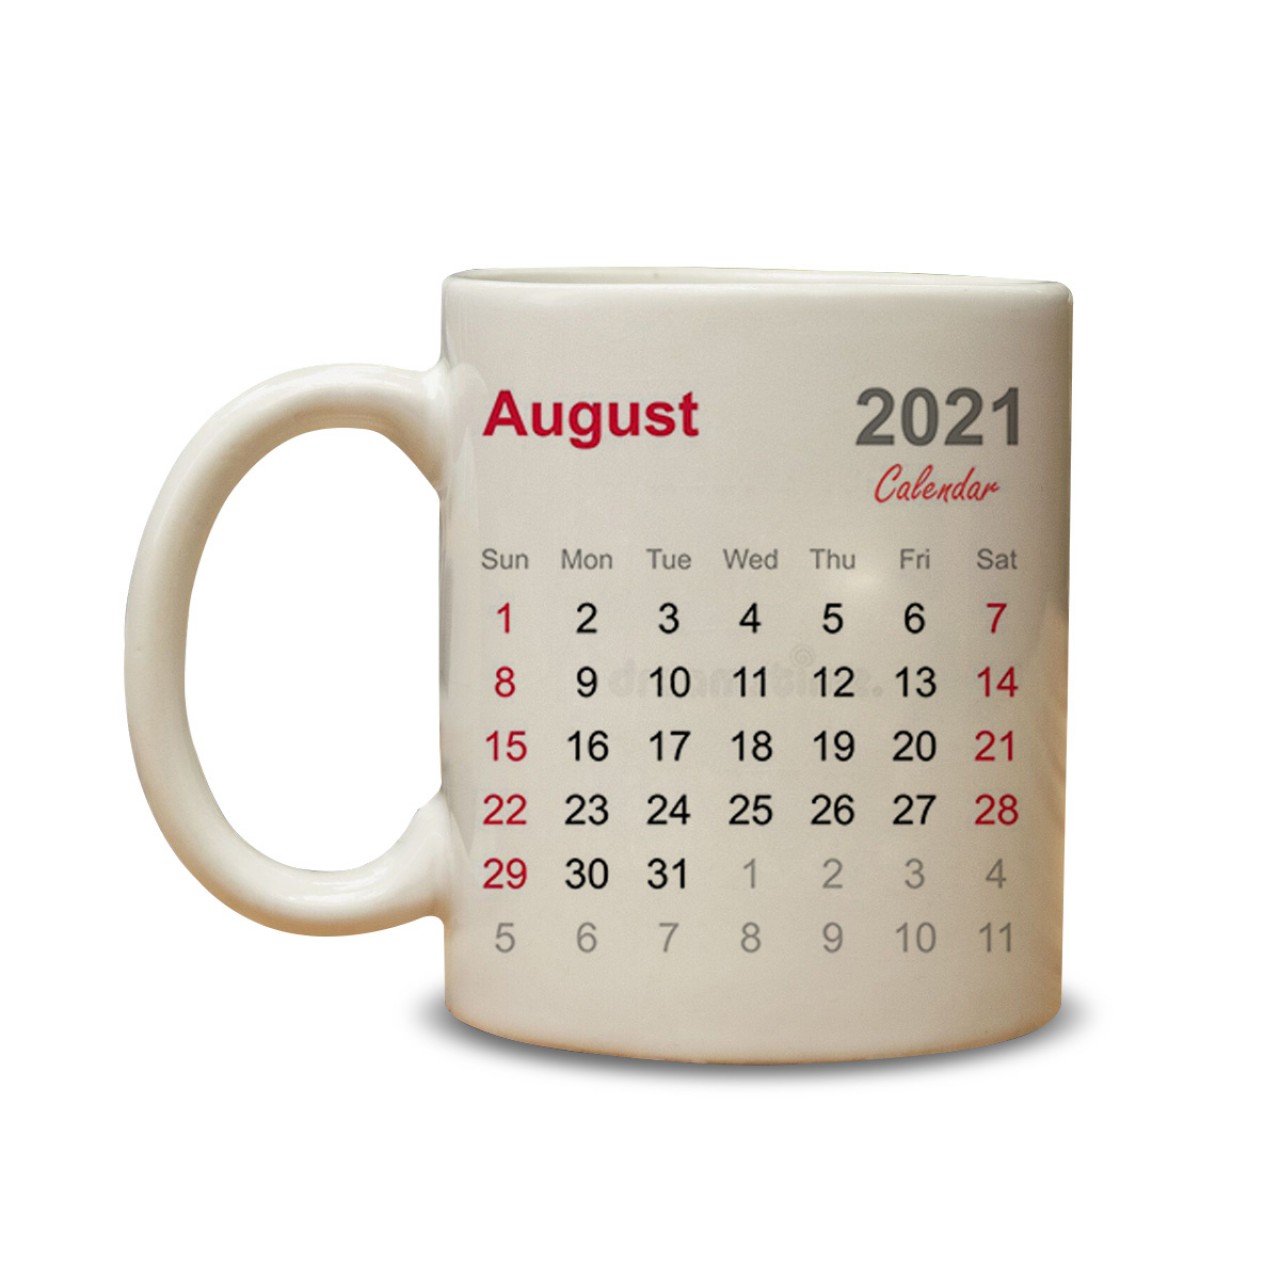 Anniversary mug